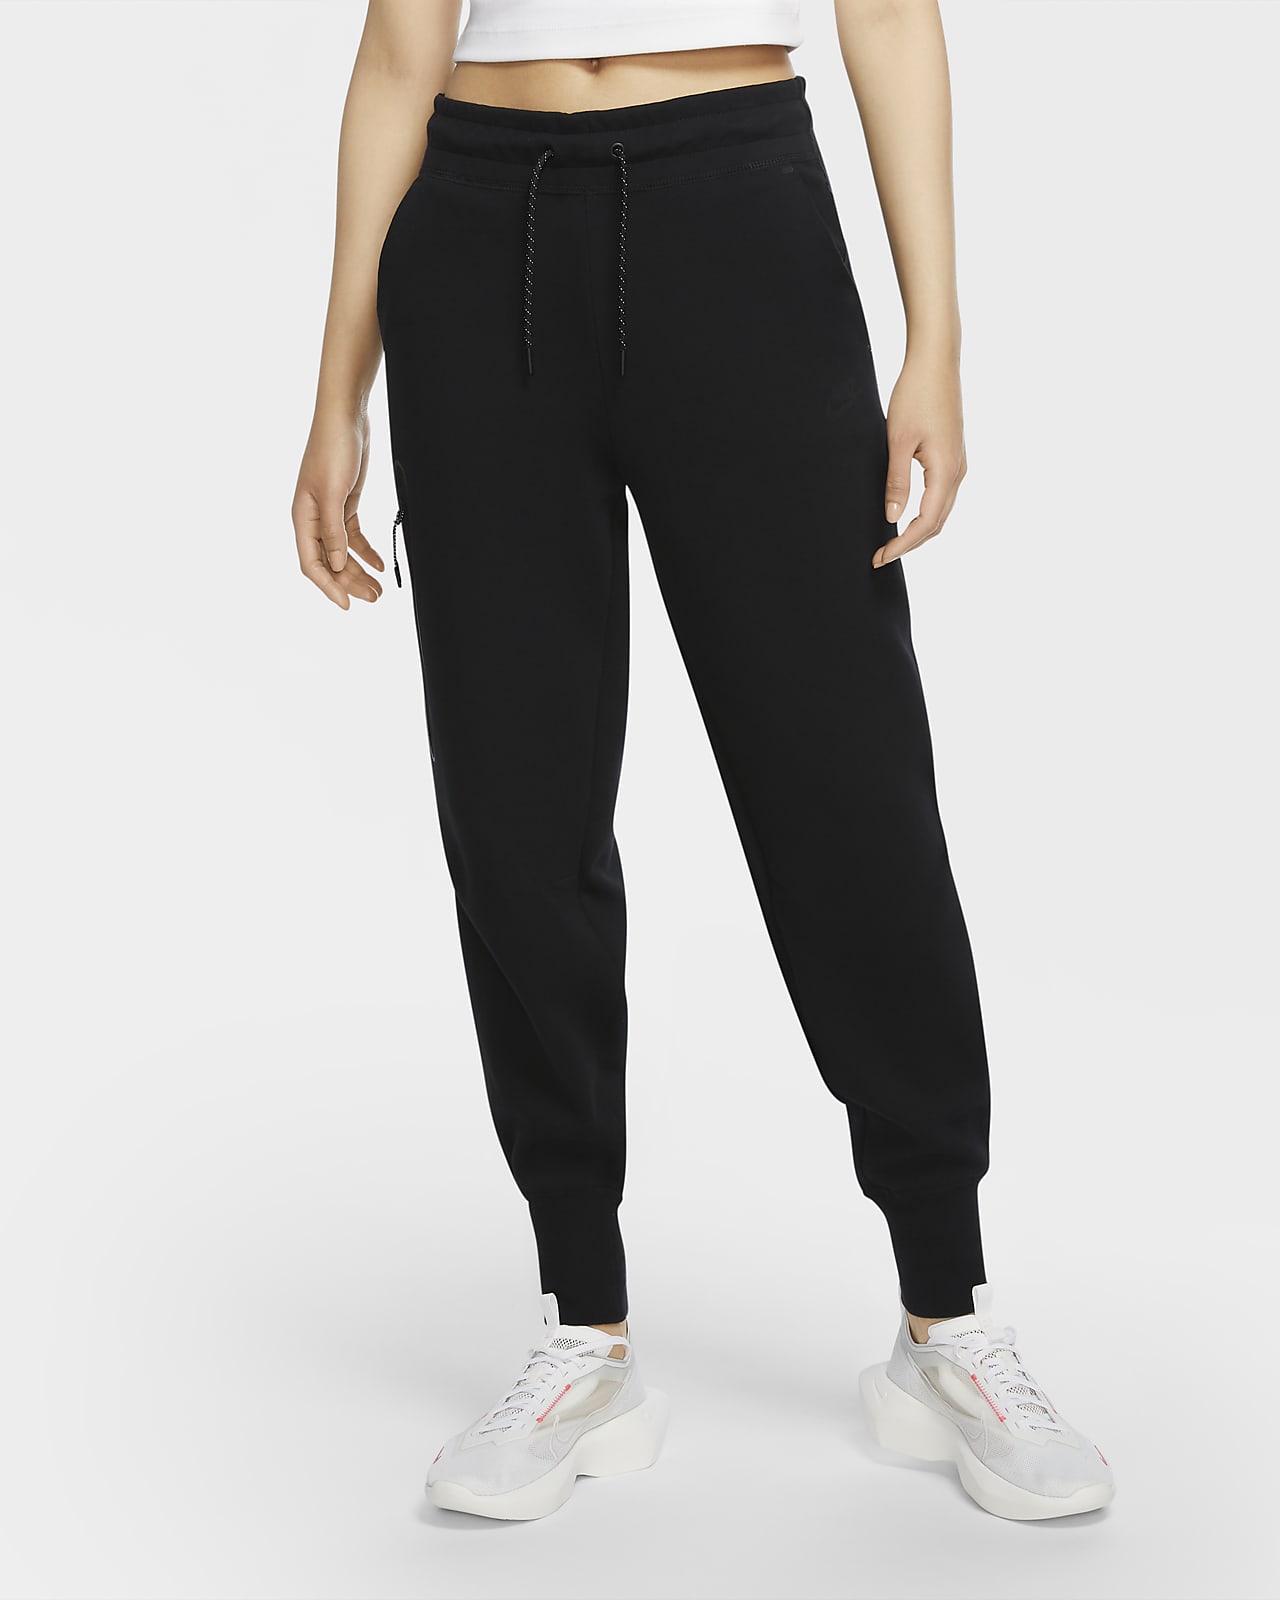 Nike Tech Fleece Pants Women's | art-kk.com